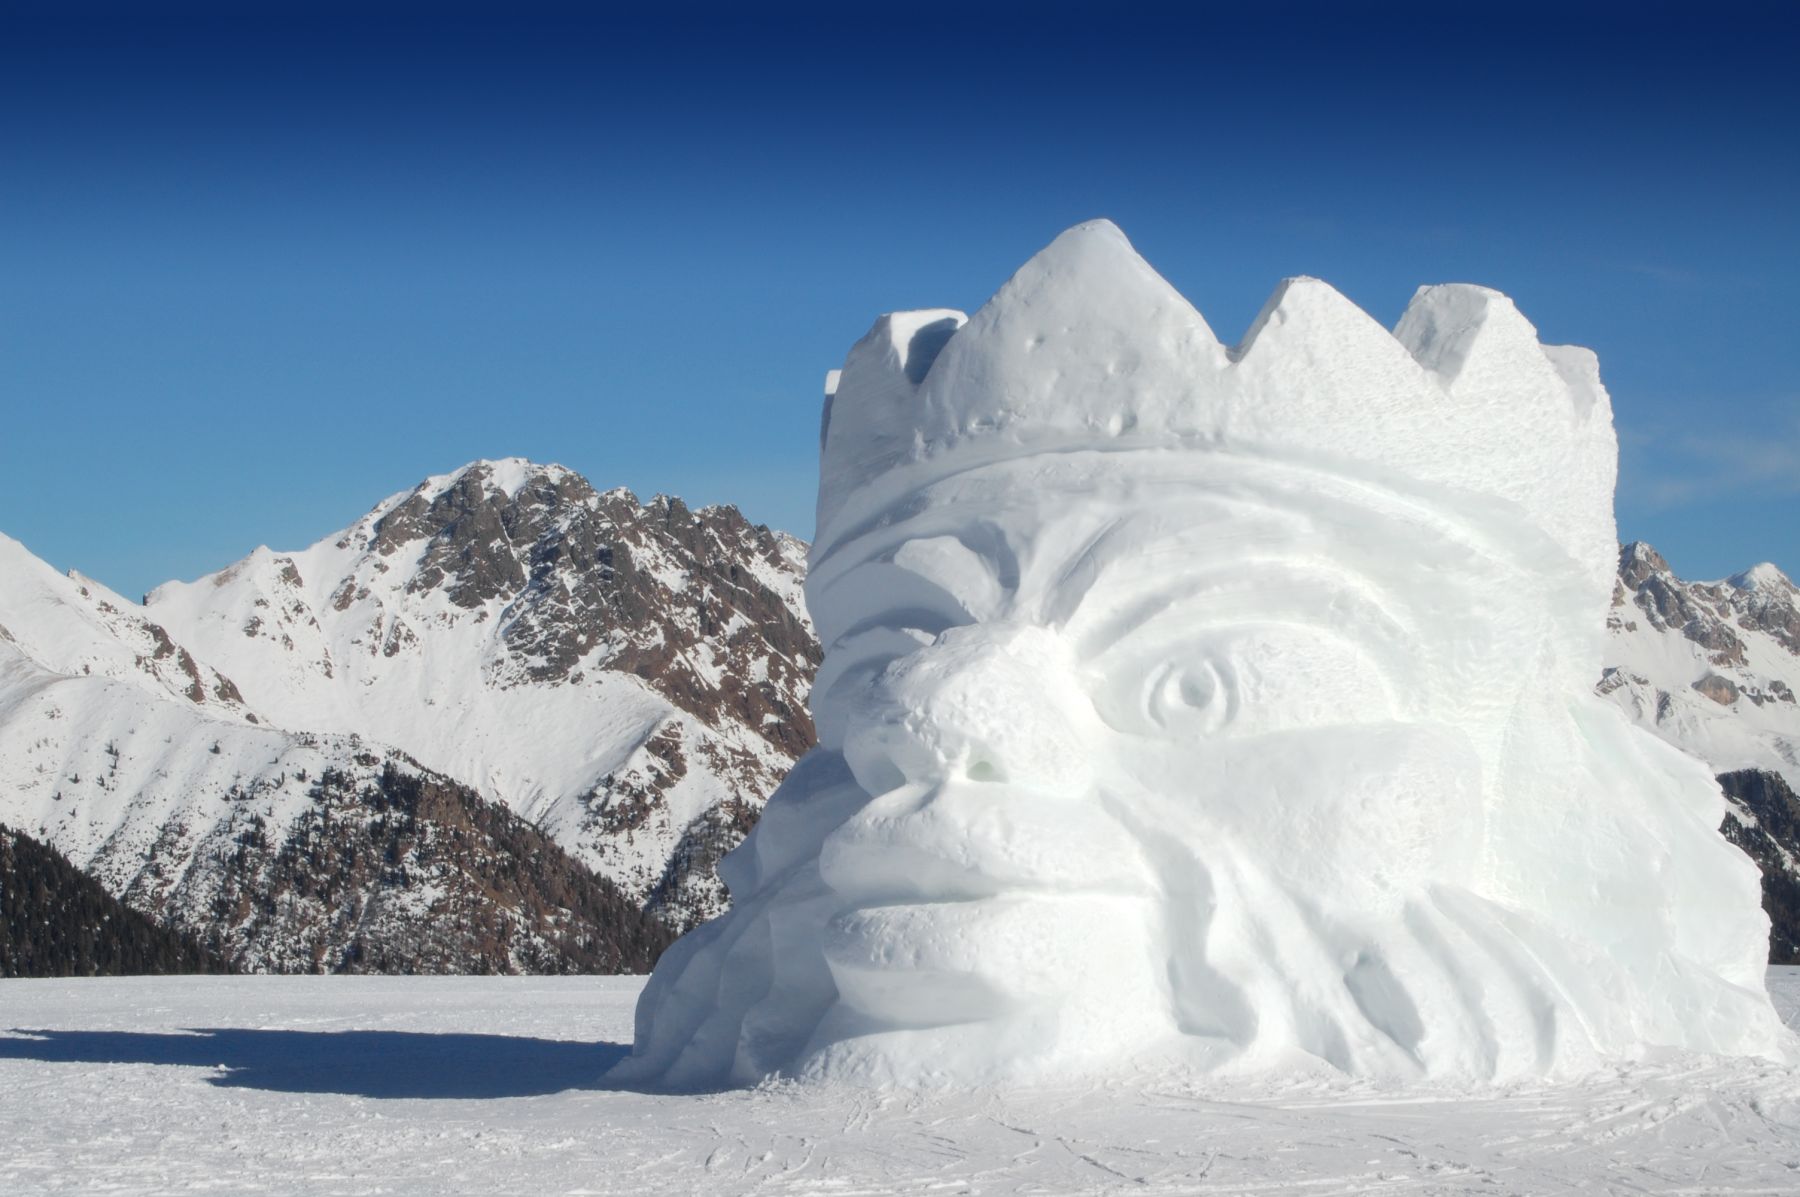 alto-adige-snow-festival-sculptures